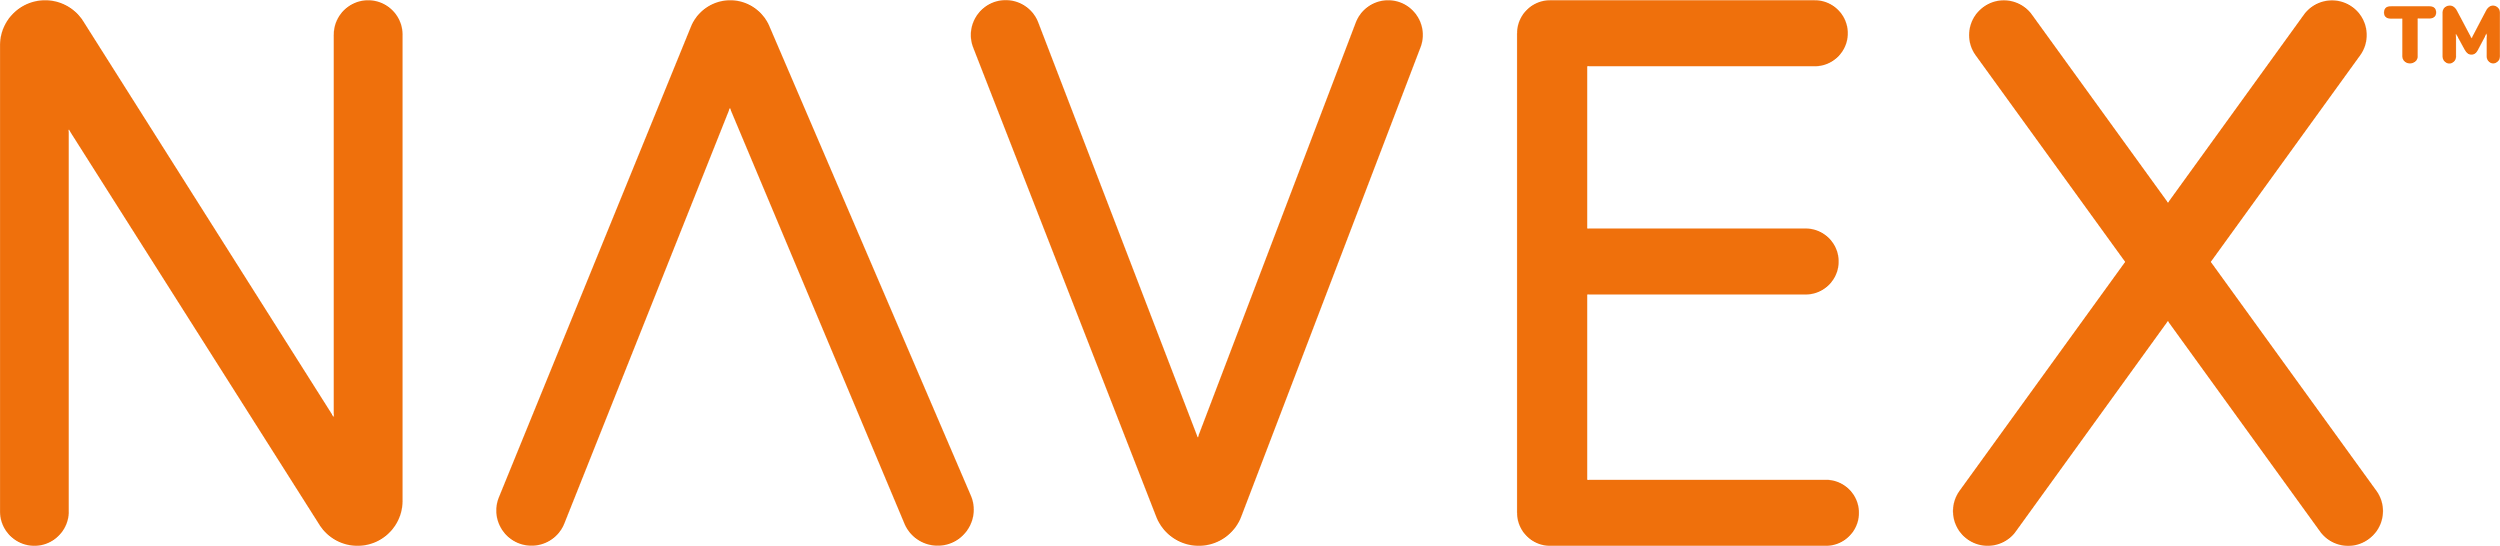 navex-global-logo